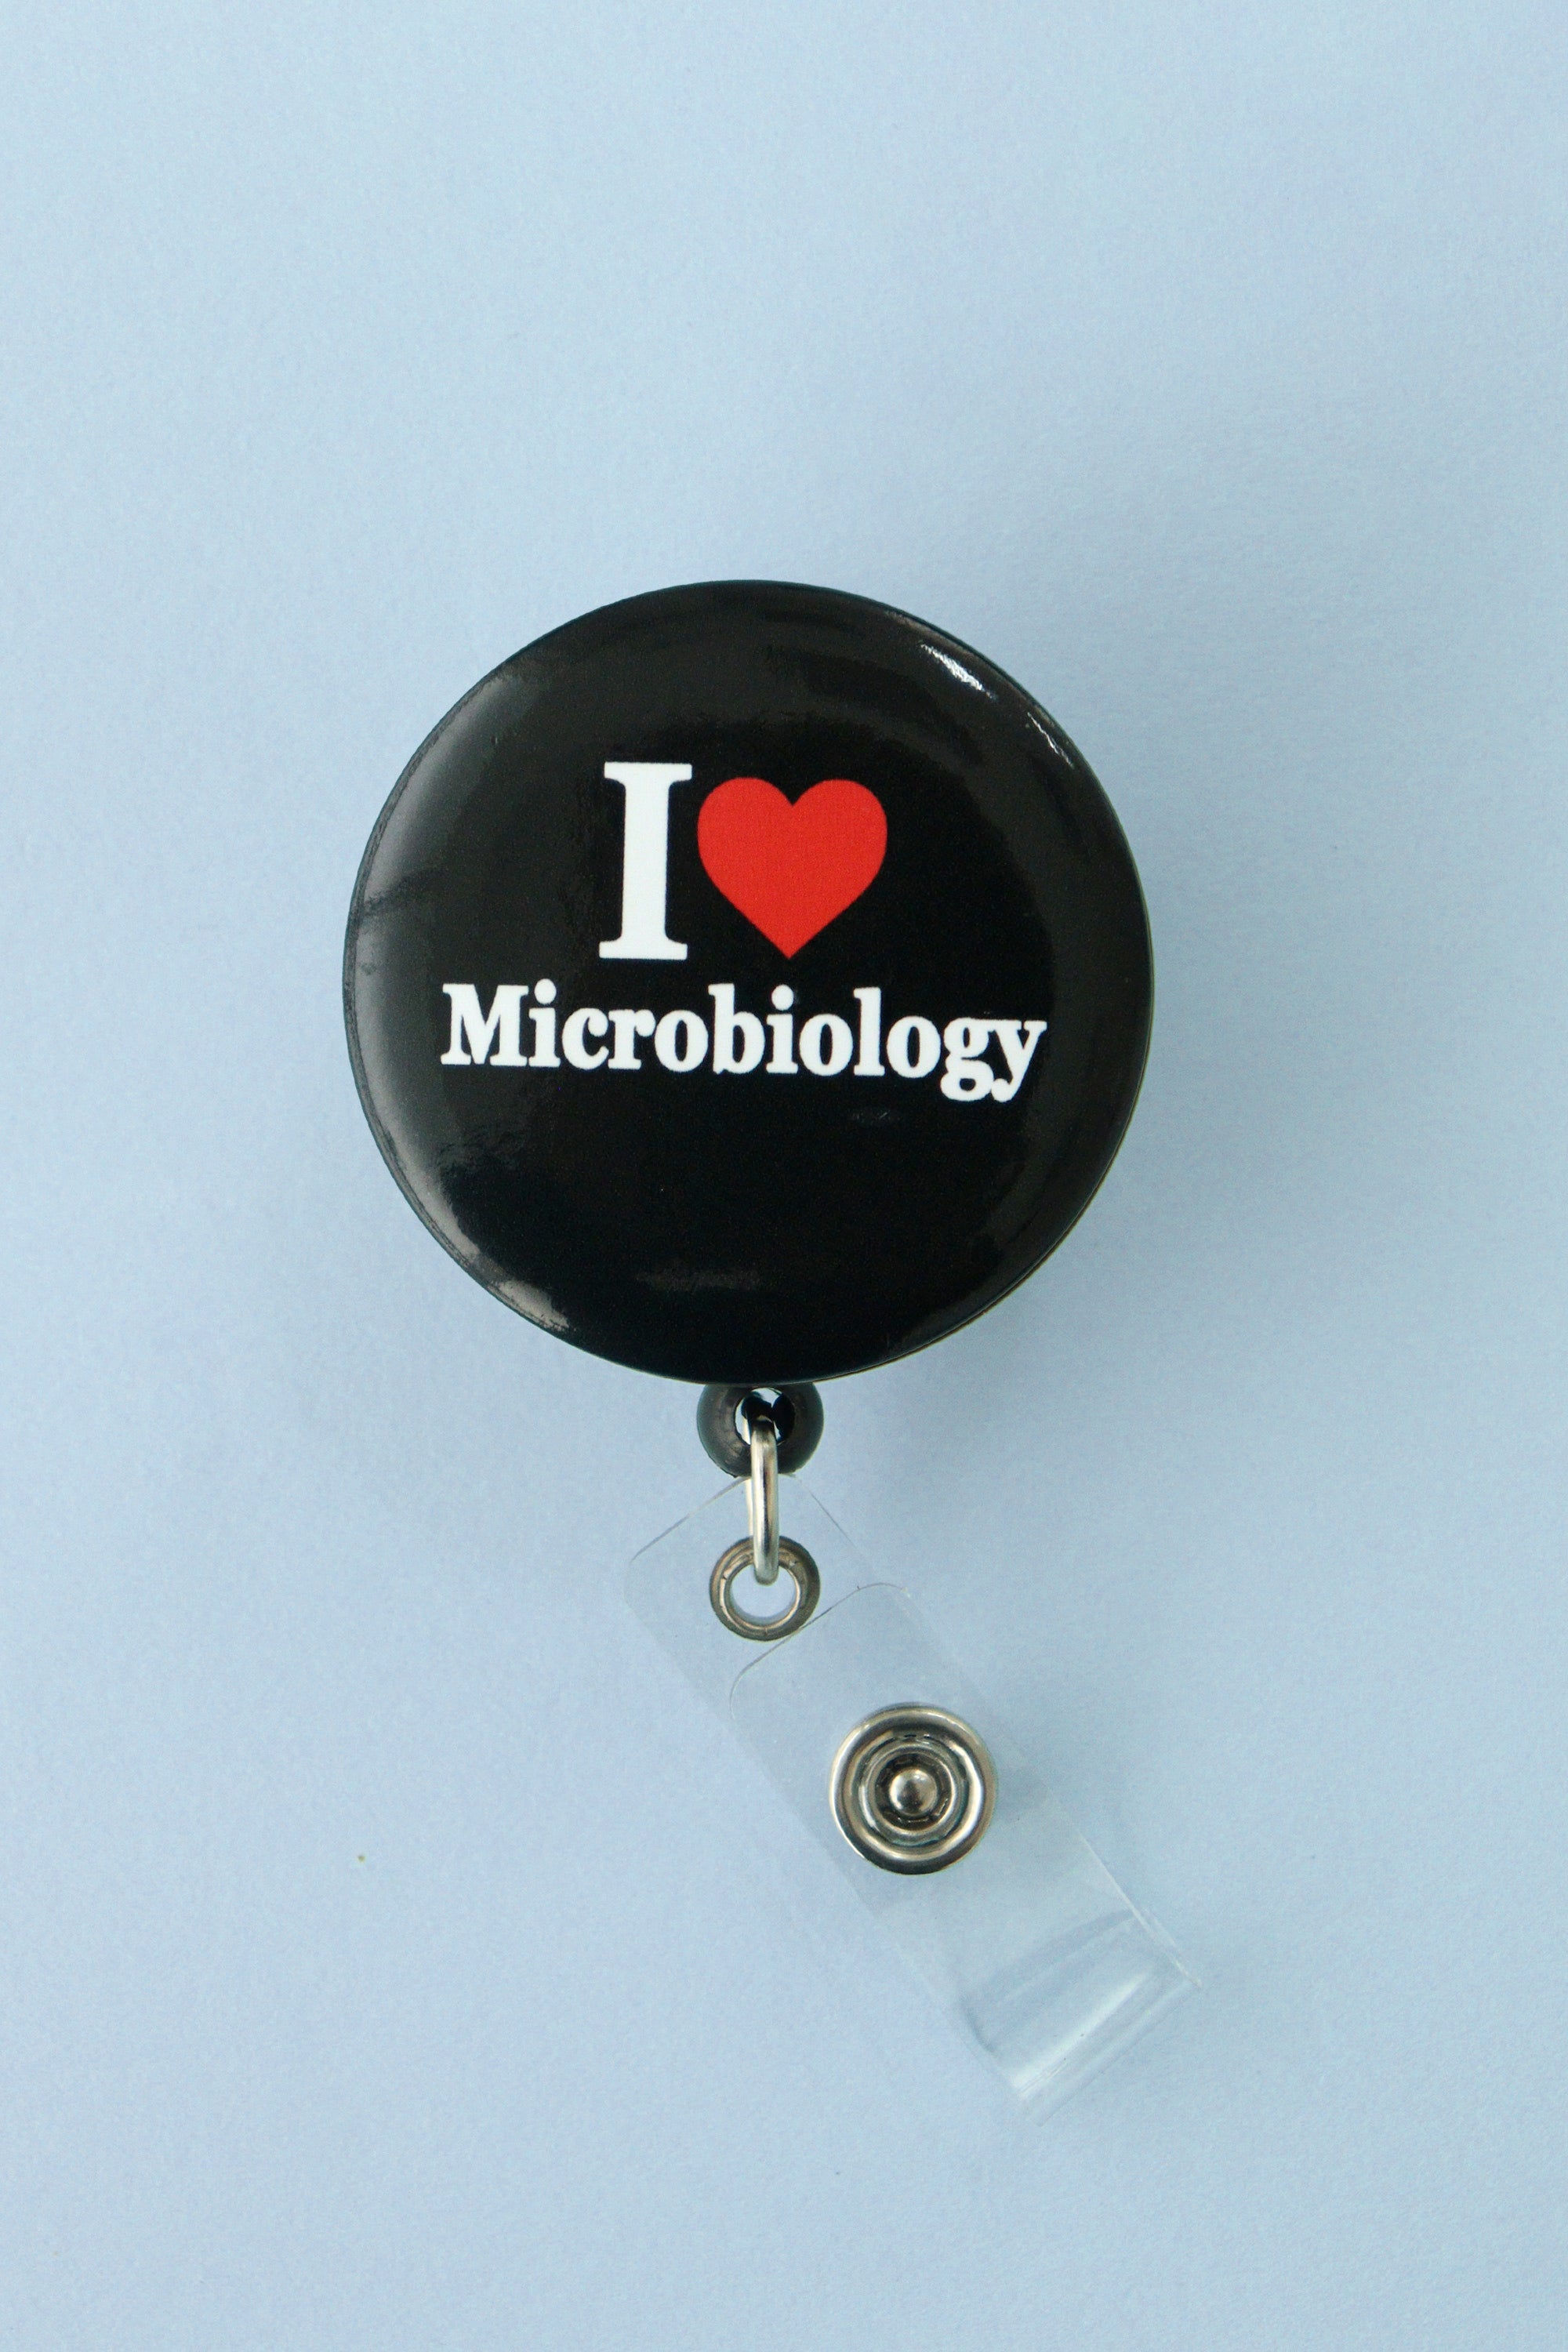 products-micorbiology1-594994-jpg